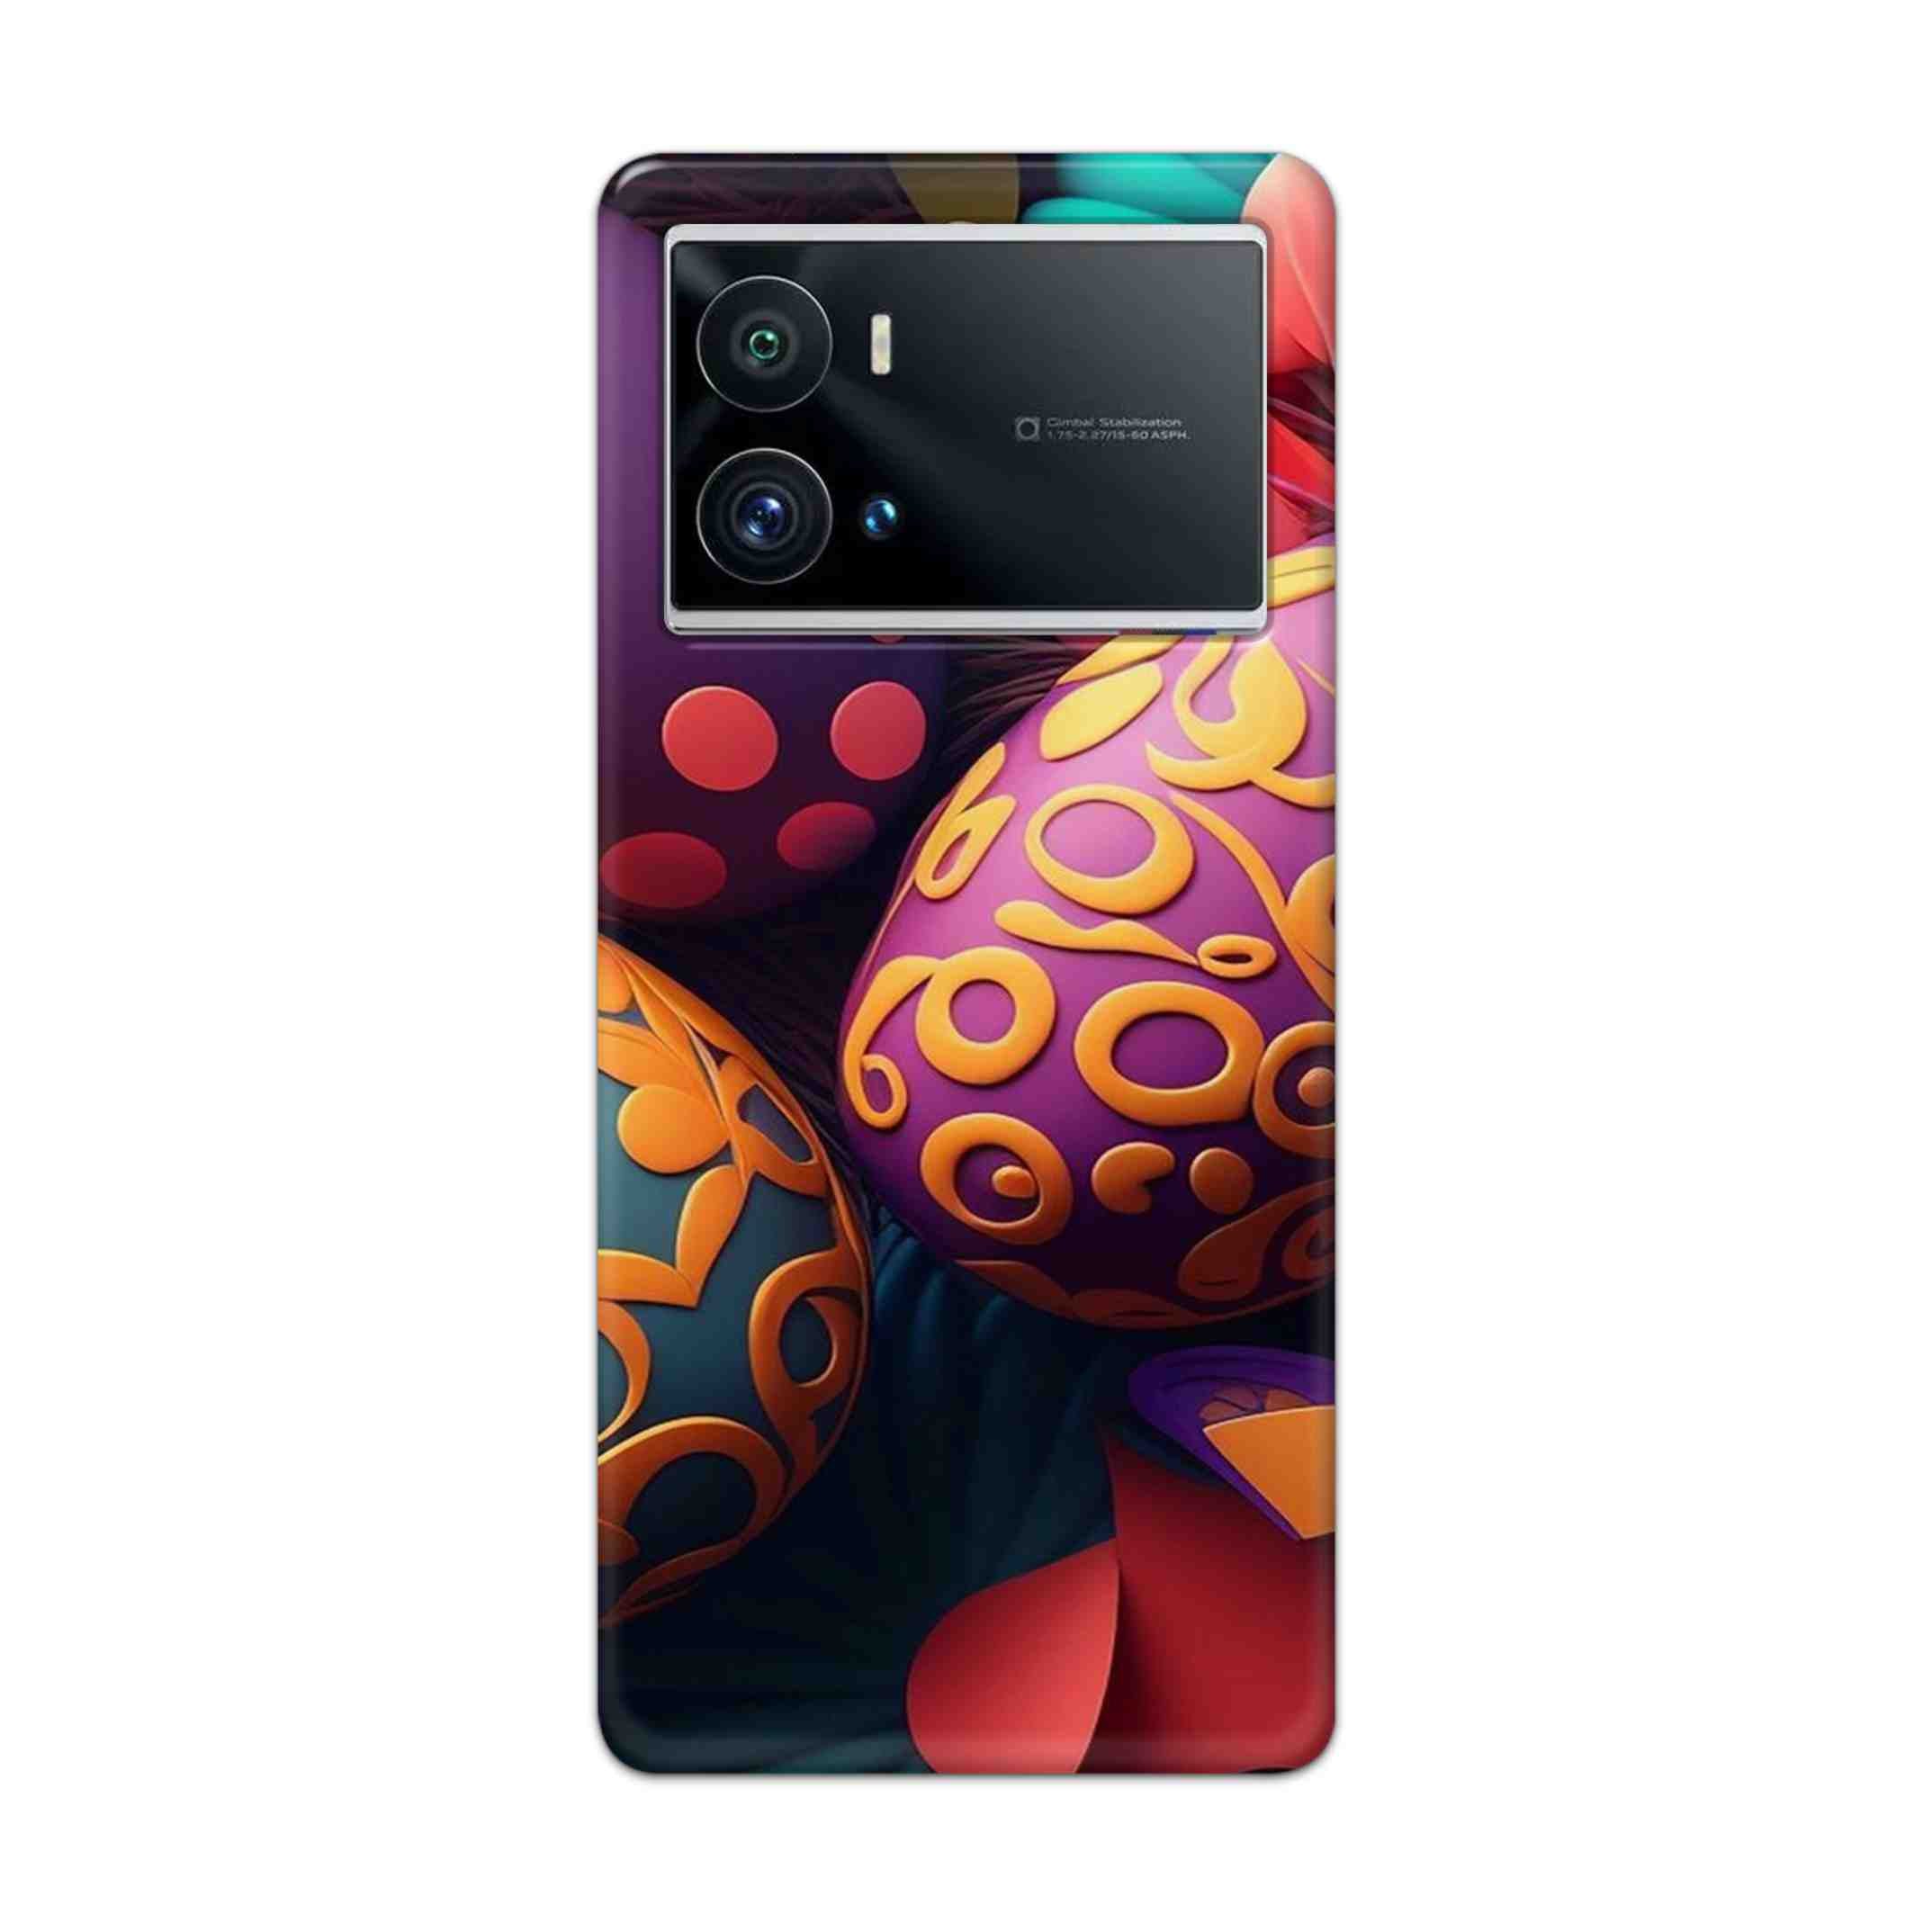 Buy Easter Egg Hard Back Mobile Phone Case Cover For iQOO 9 Pro 5G Online